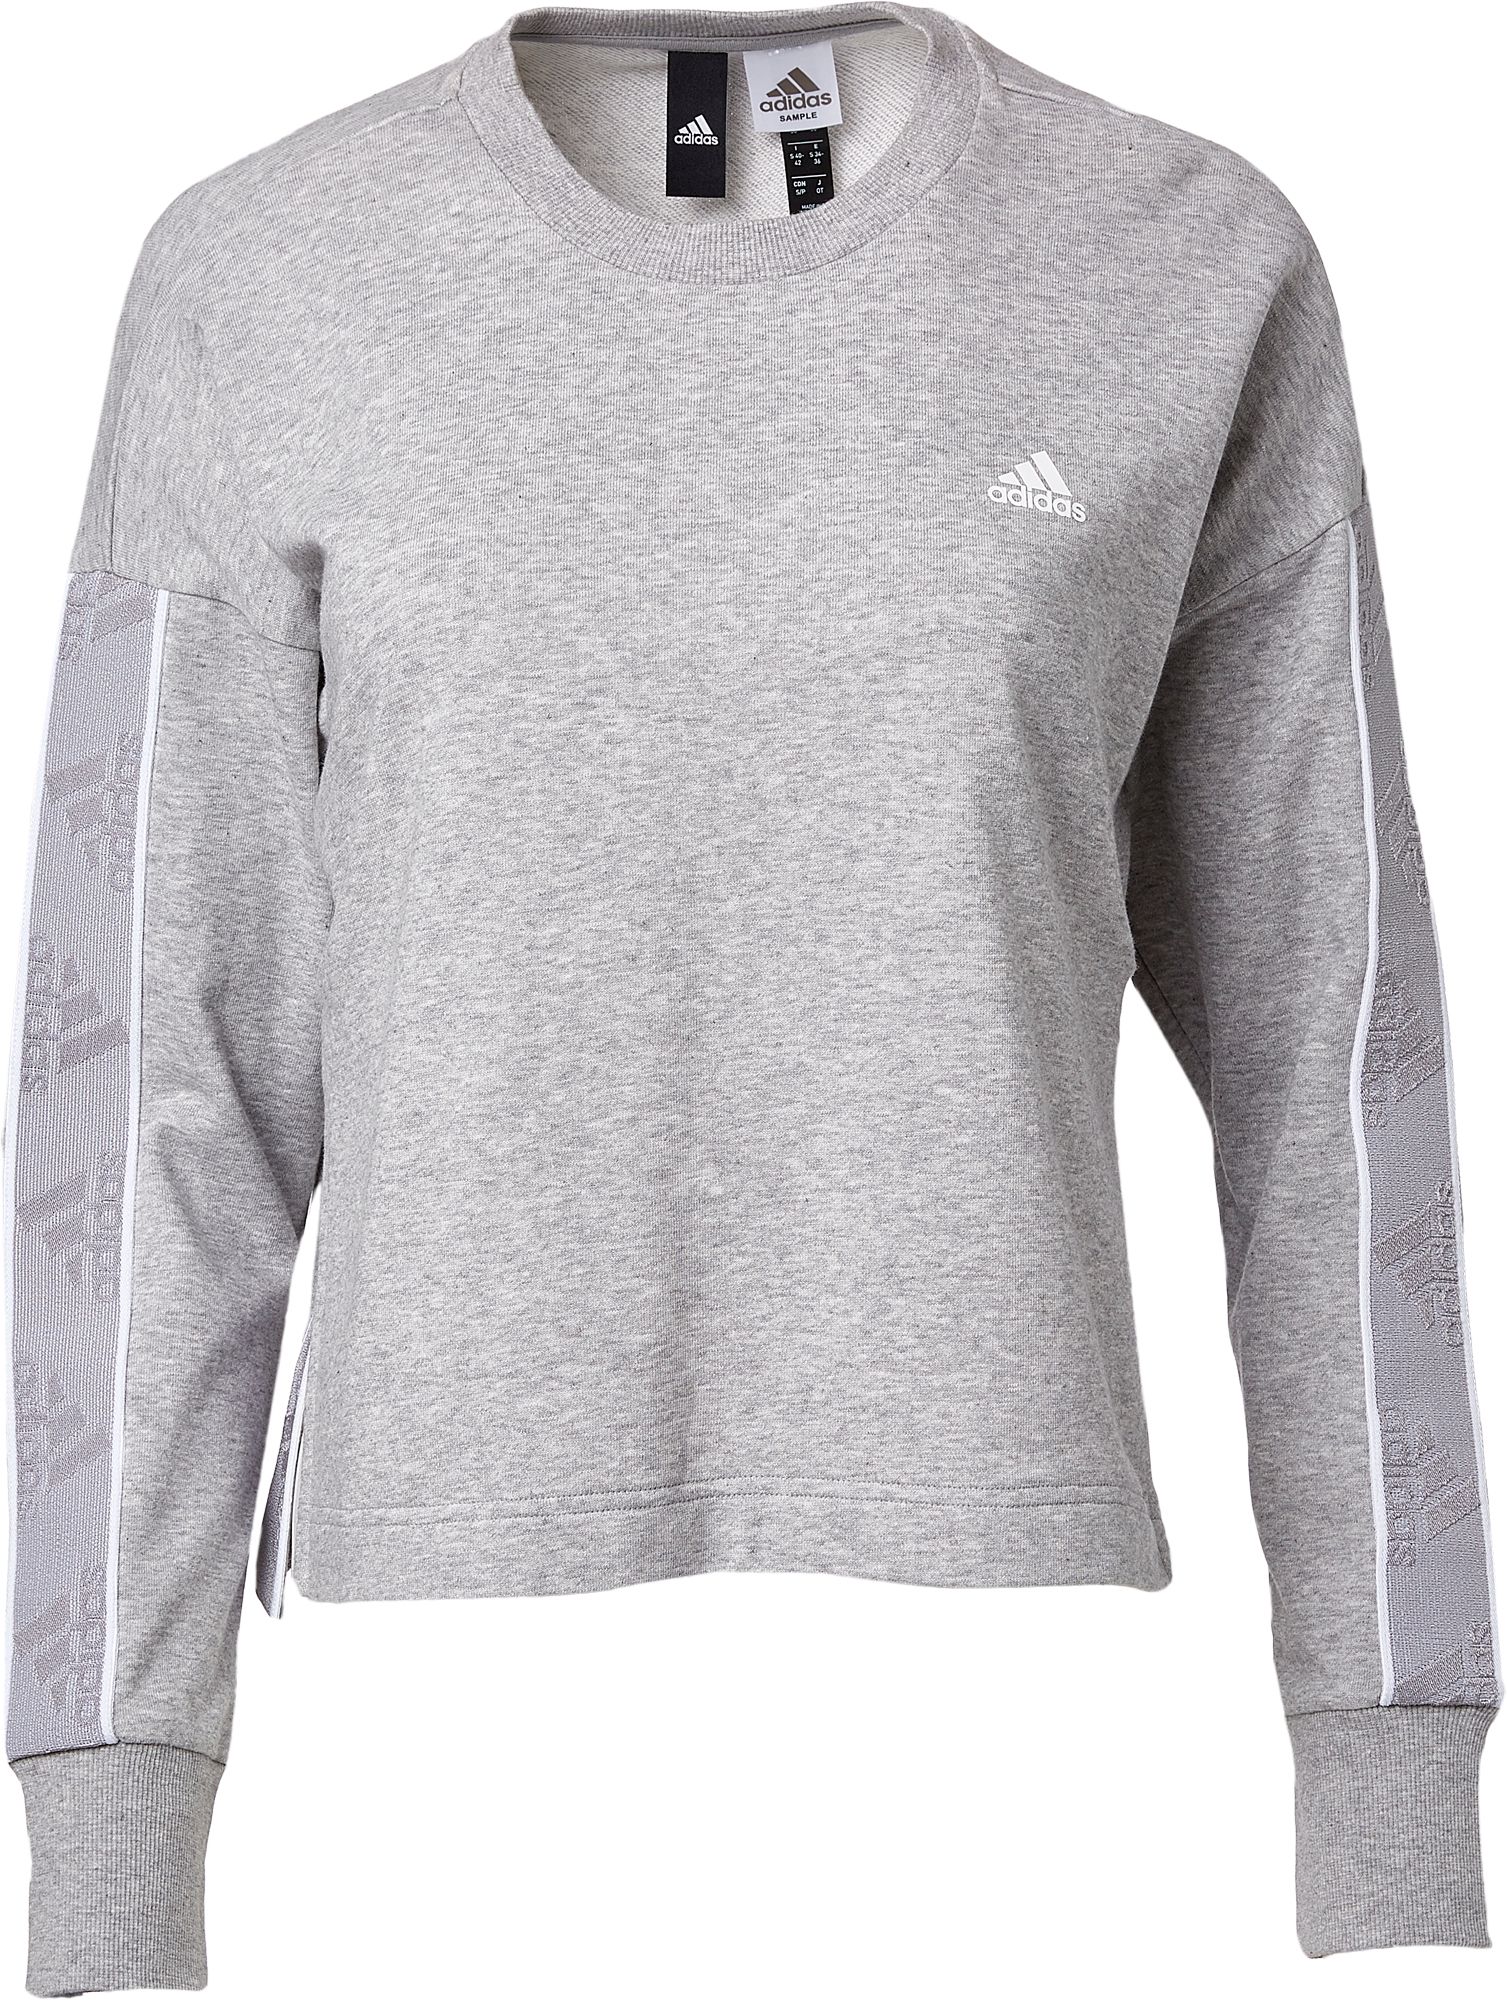 Download Adidas Women's Changeover Tape Crewneck Sweatshirt - Big ...